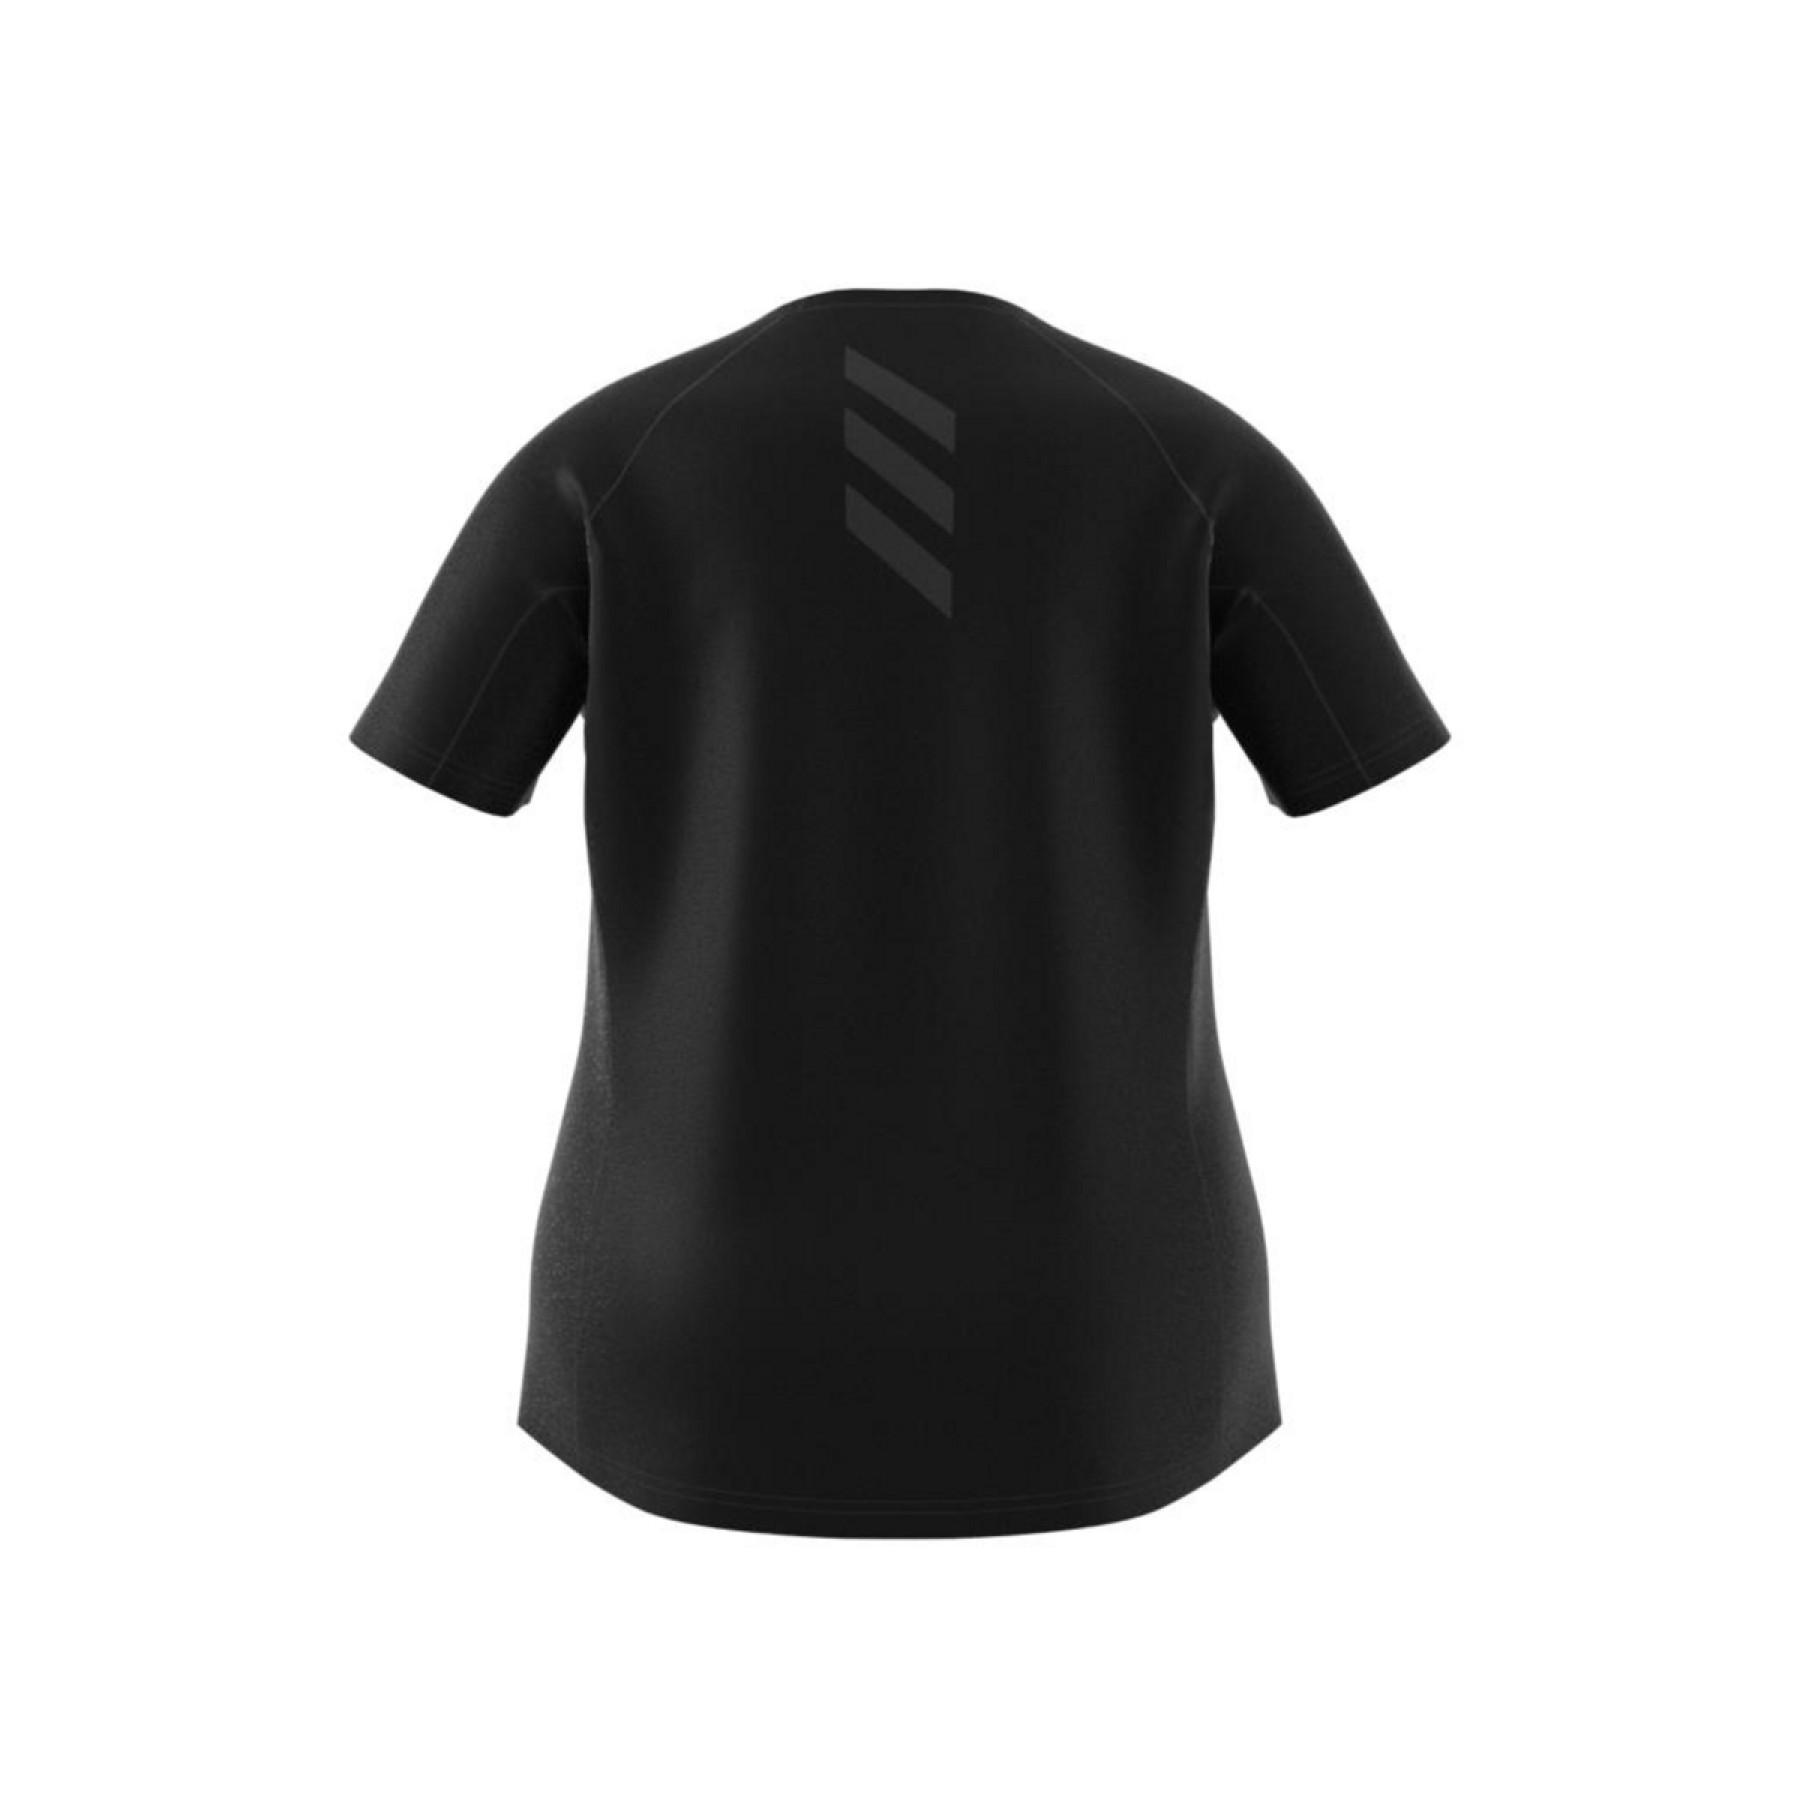 Frauen-T-Shirt adidas Runner Grande Taille